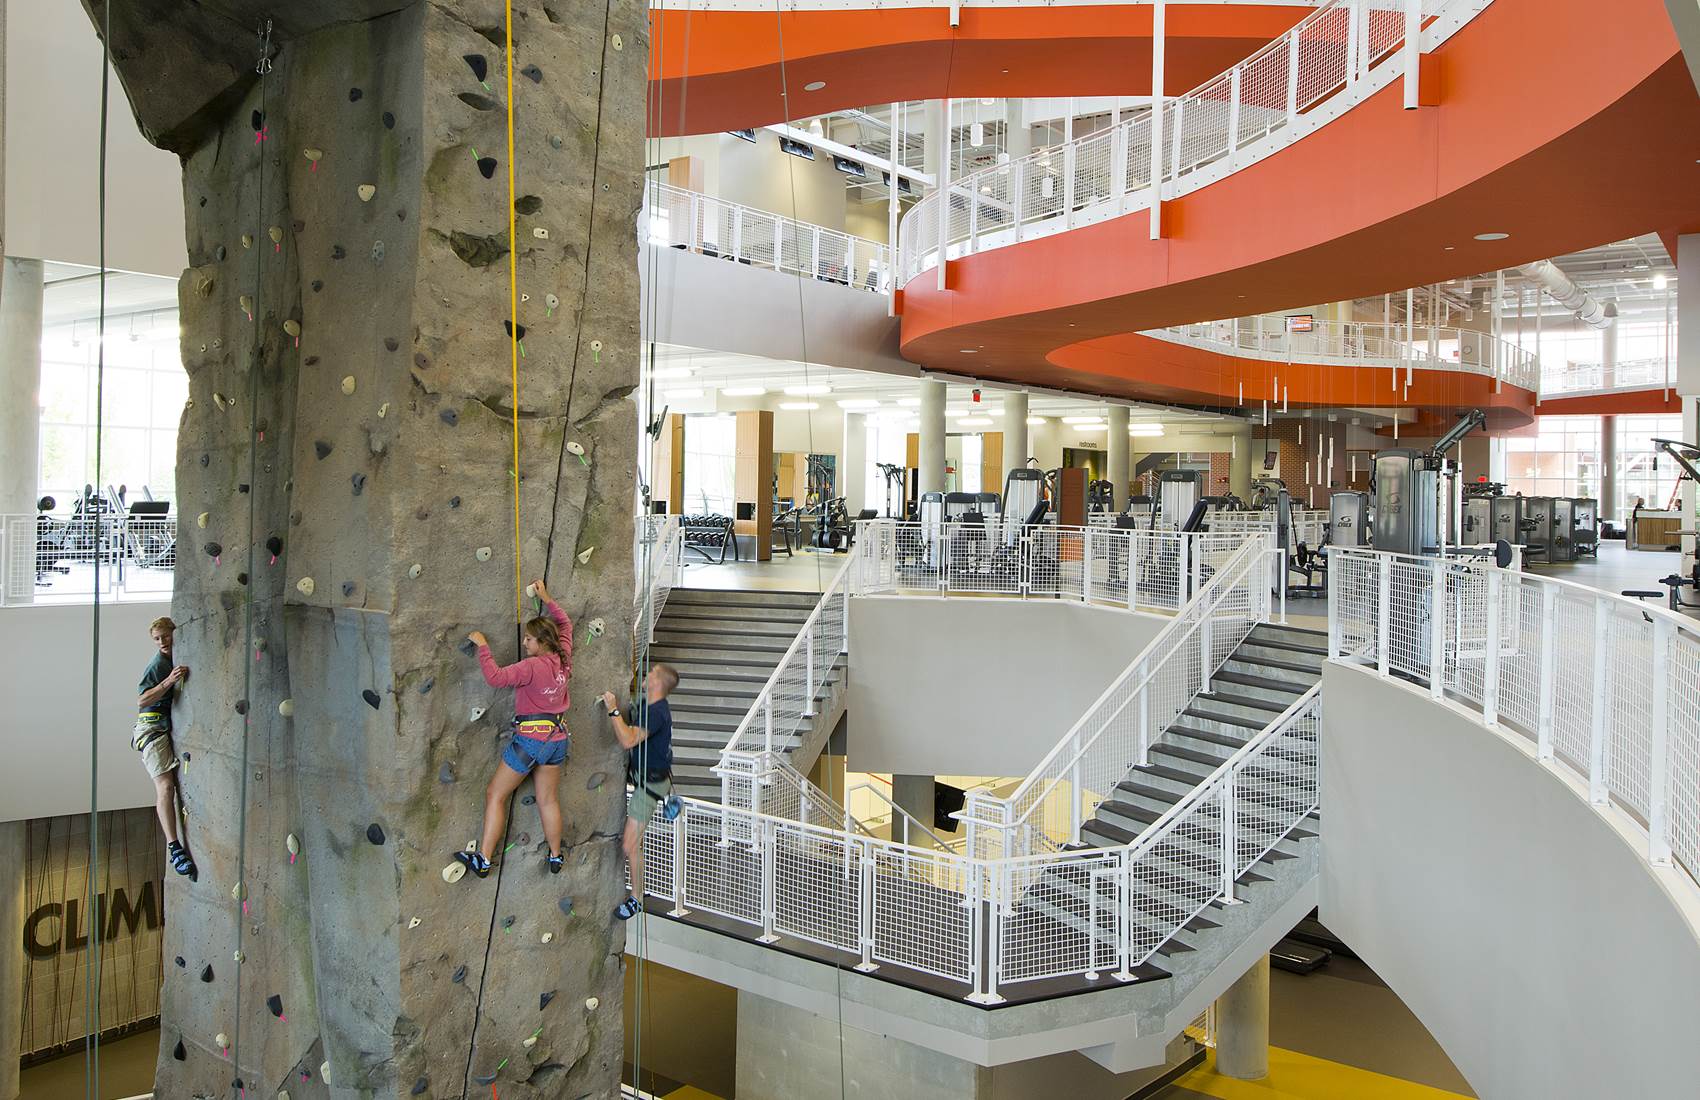 Climbing Wall at the Auburn University Recreation and Wellness Center